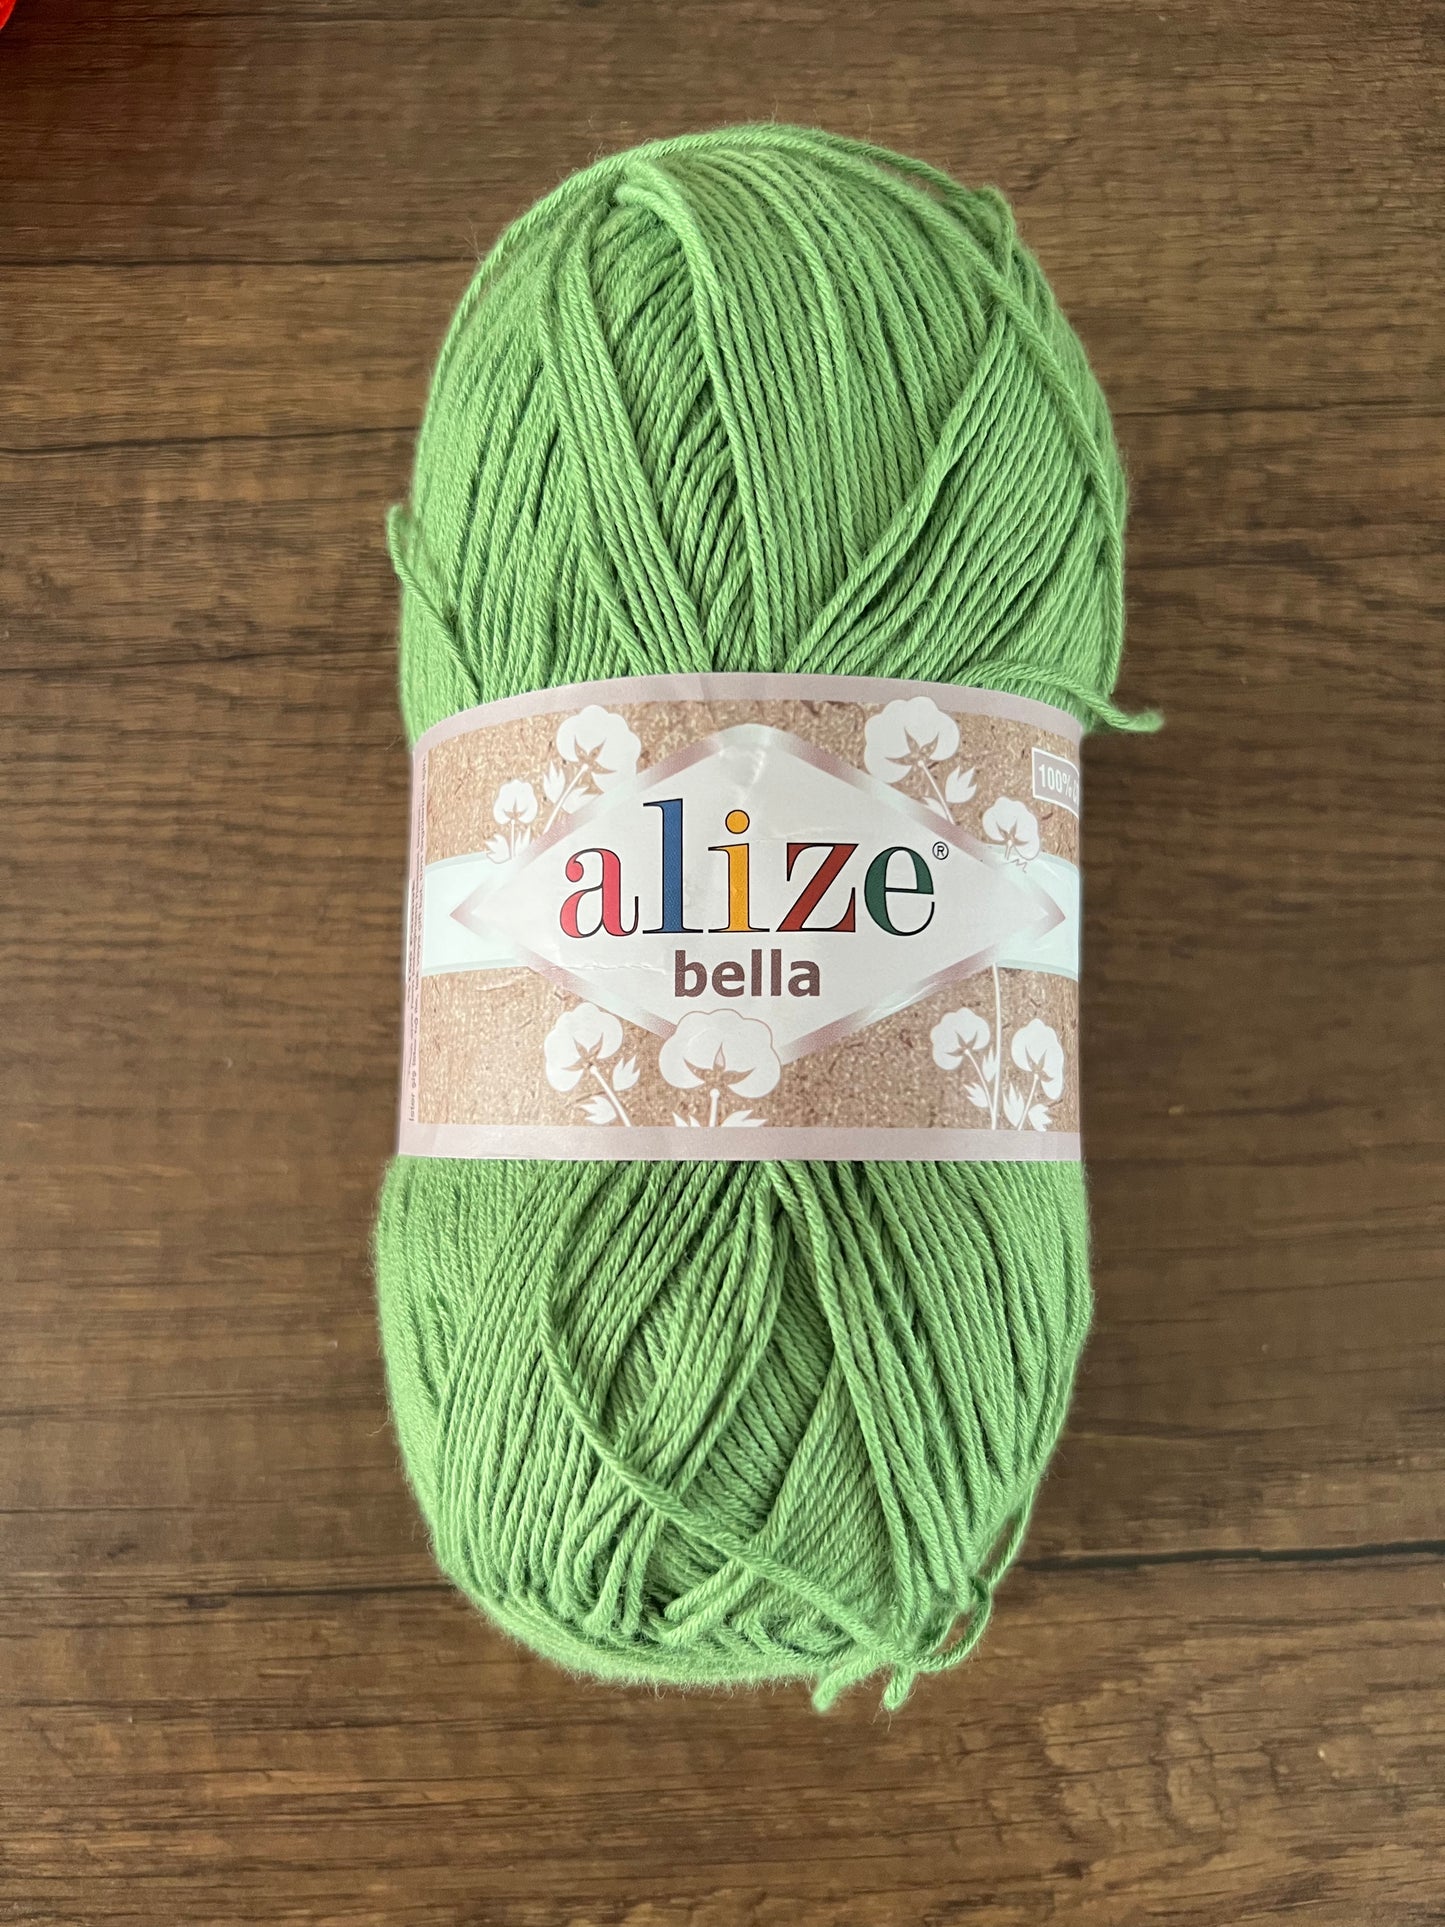 Bella by Alize